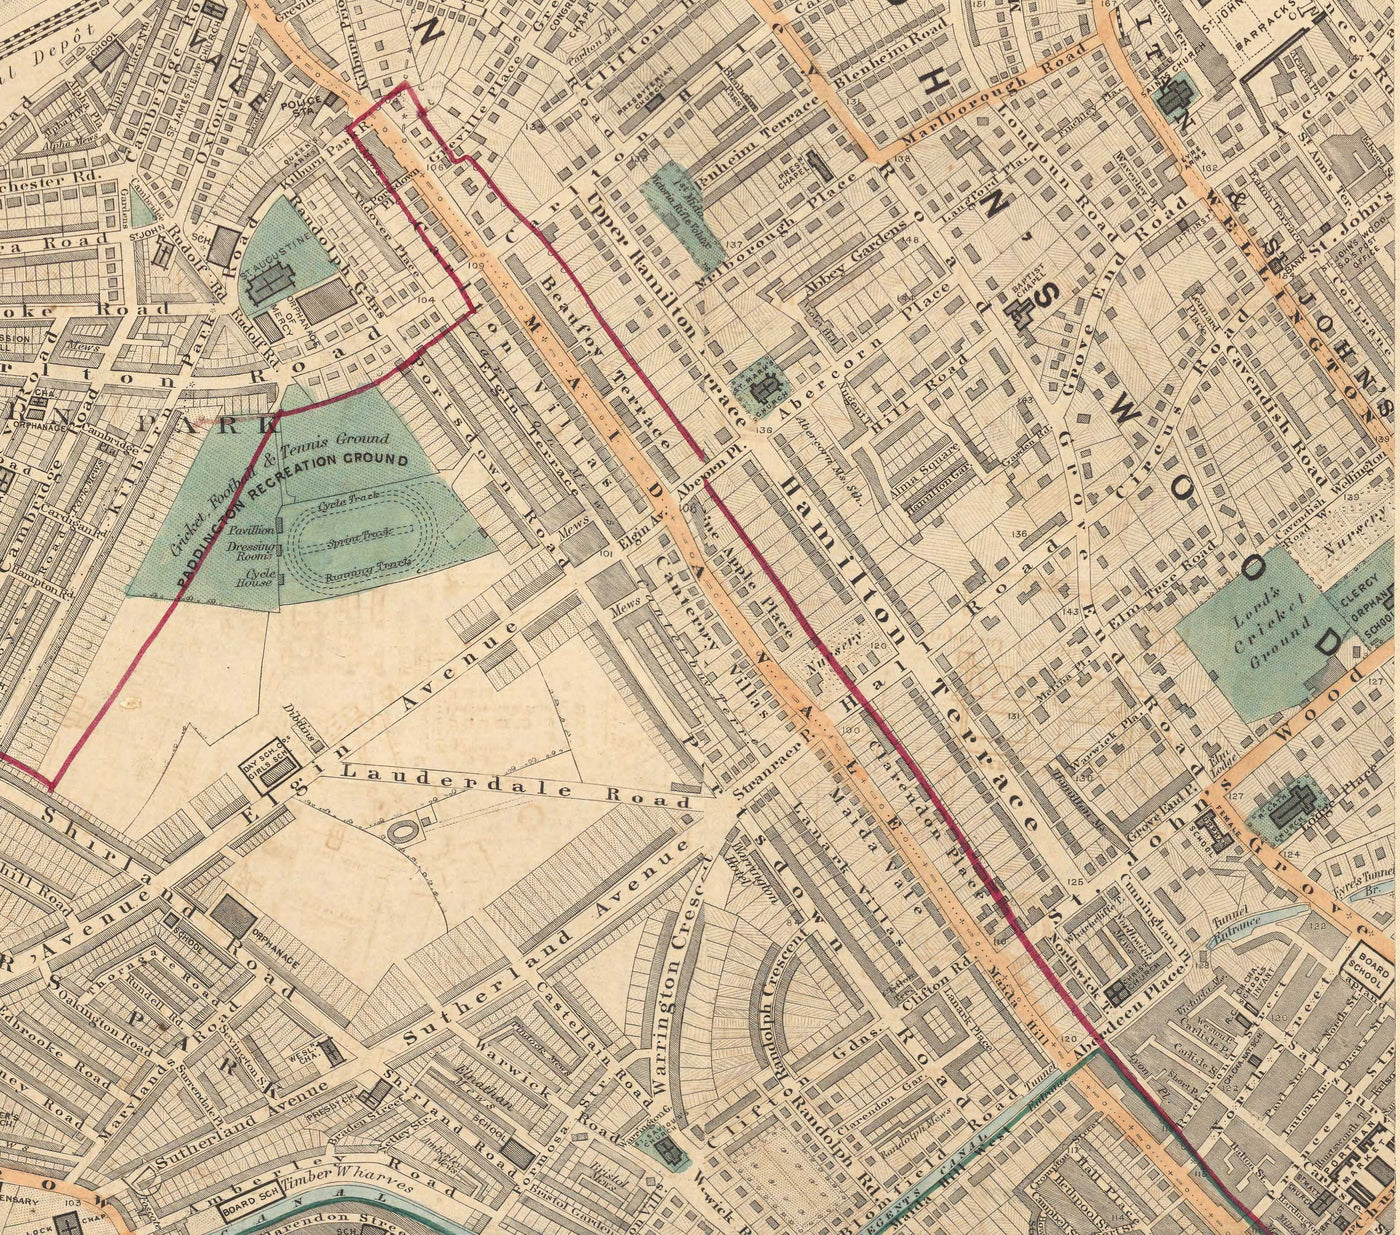 Alte Farbkarte von West London, 1862 - St Johns Wood, Kilburn, Kensal Green, Finchley Rd, Willesden - NW6, NW8, NW2, W9, W10, NW10